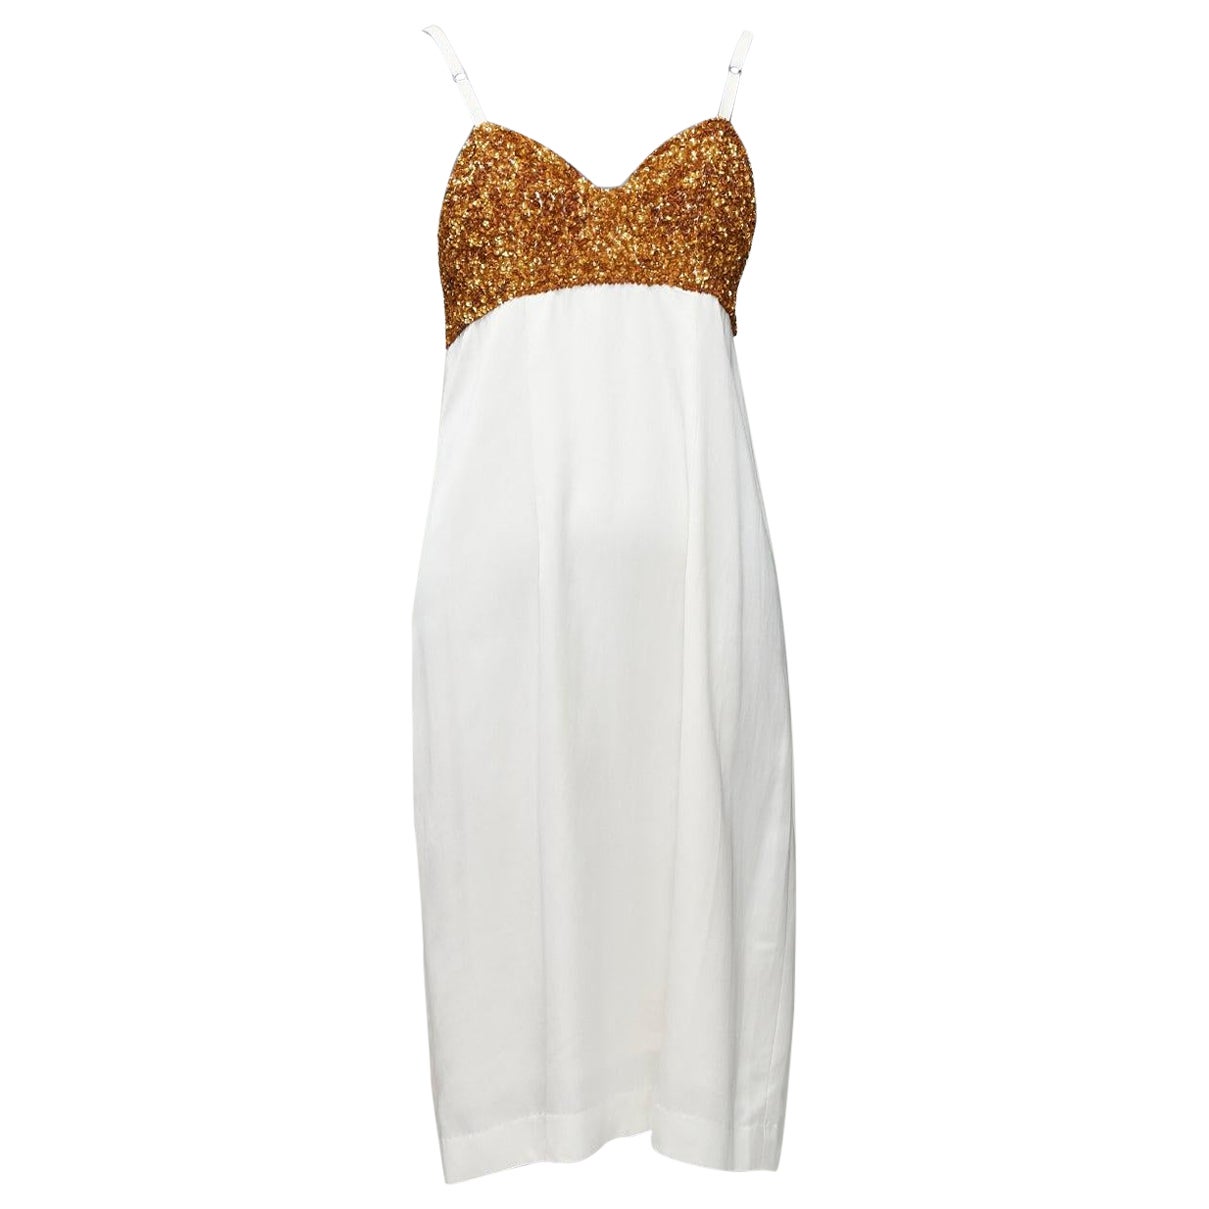 DRIES VAN NOTEN Runway gold sequins bust white satin strappy slip dress FR36 S For Sale